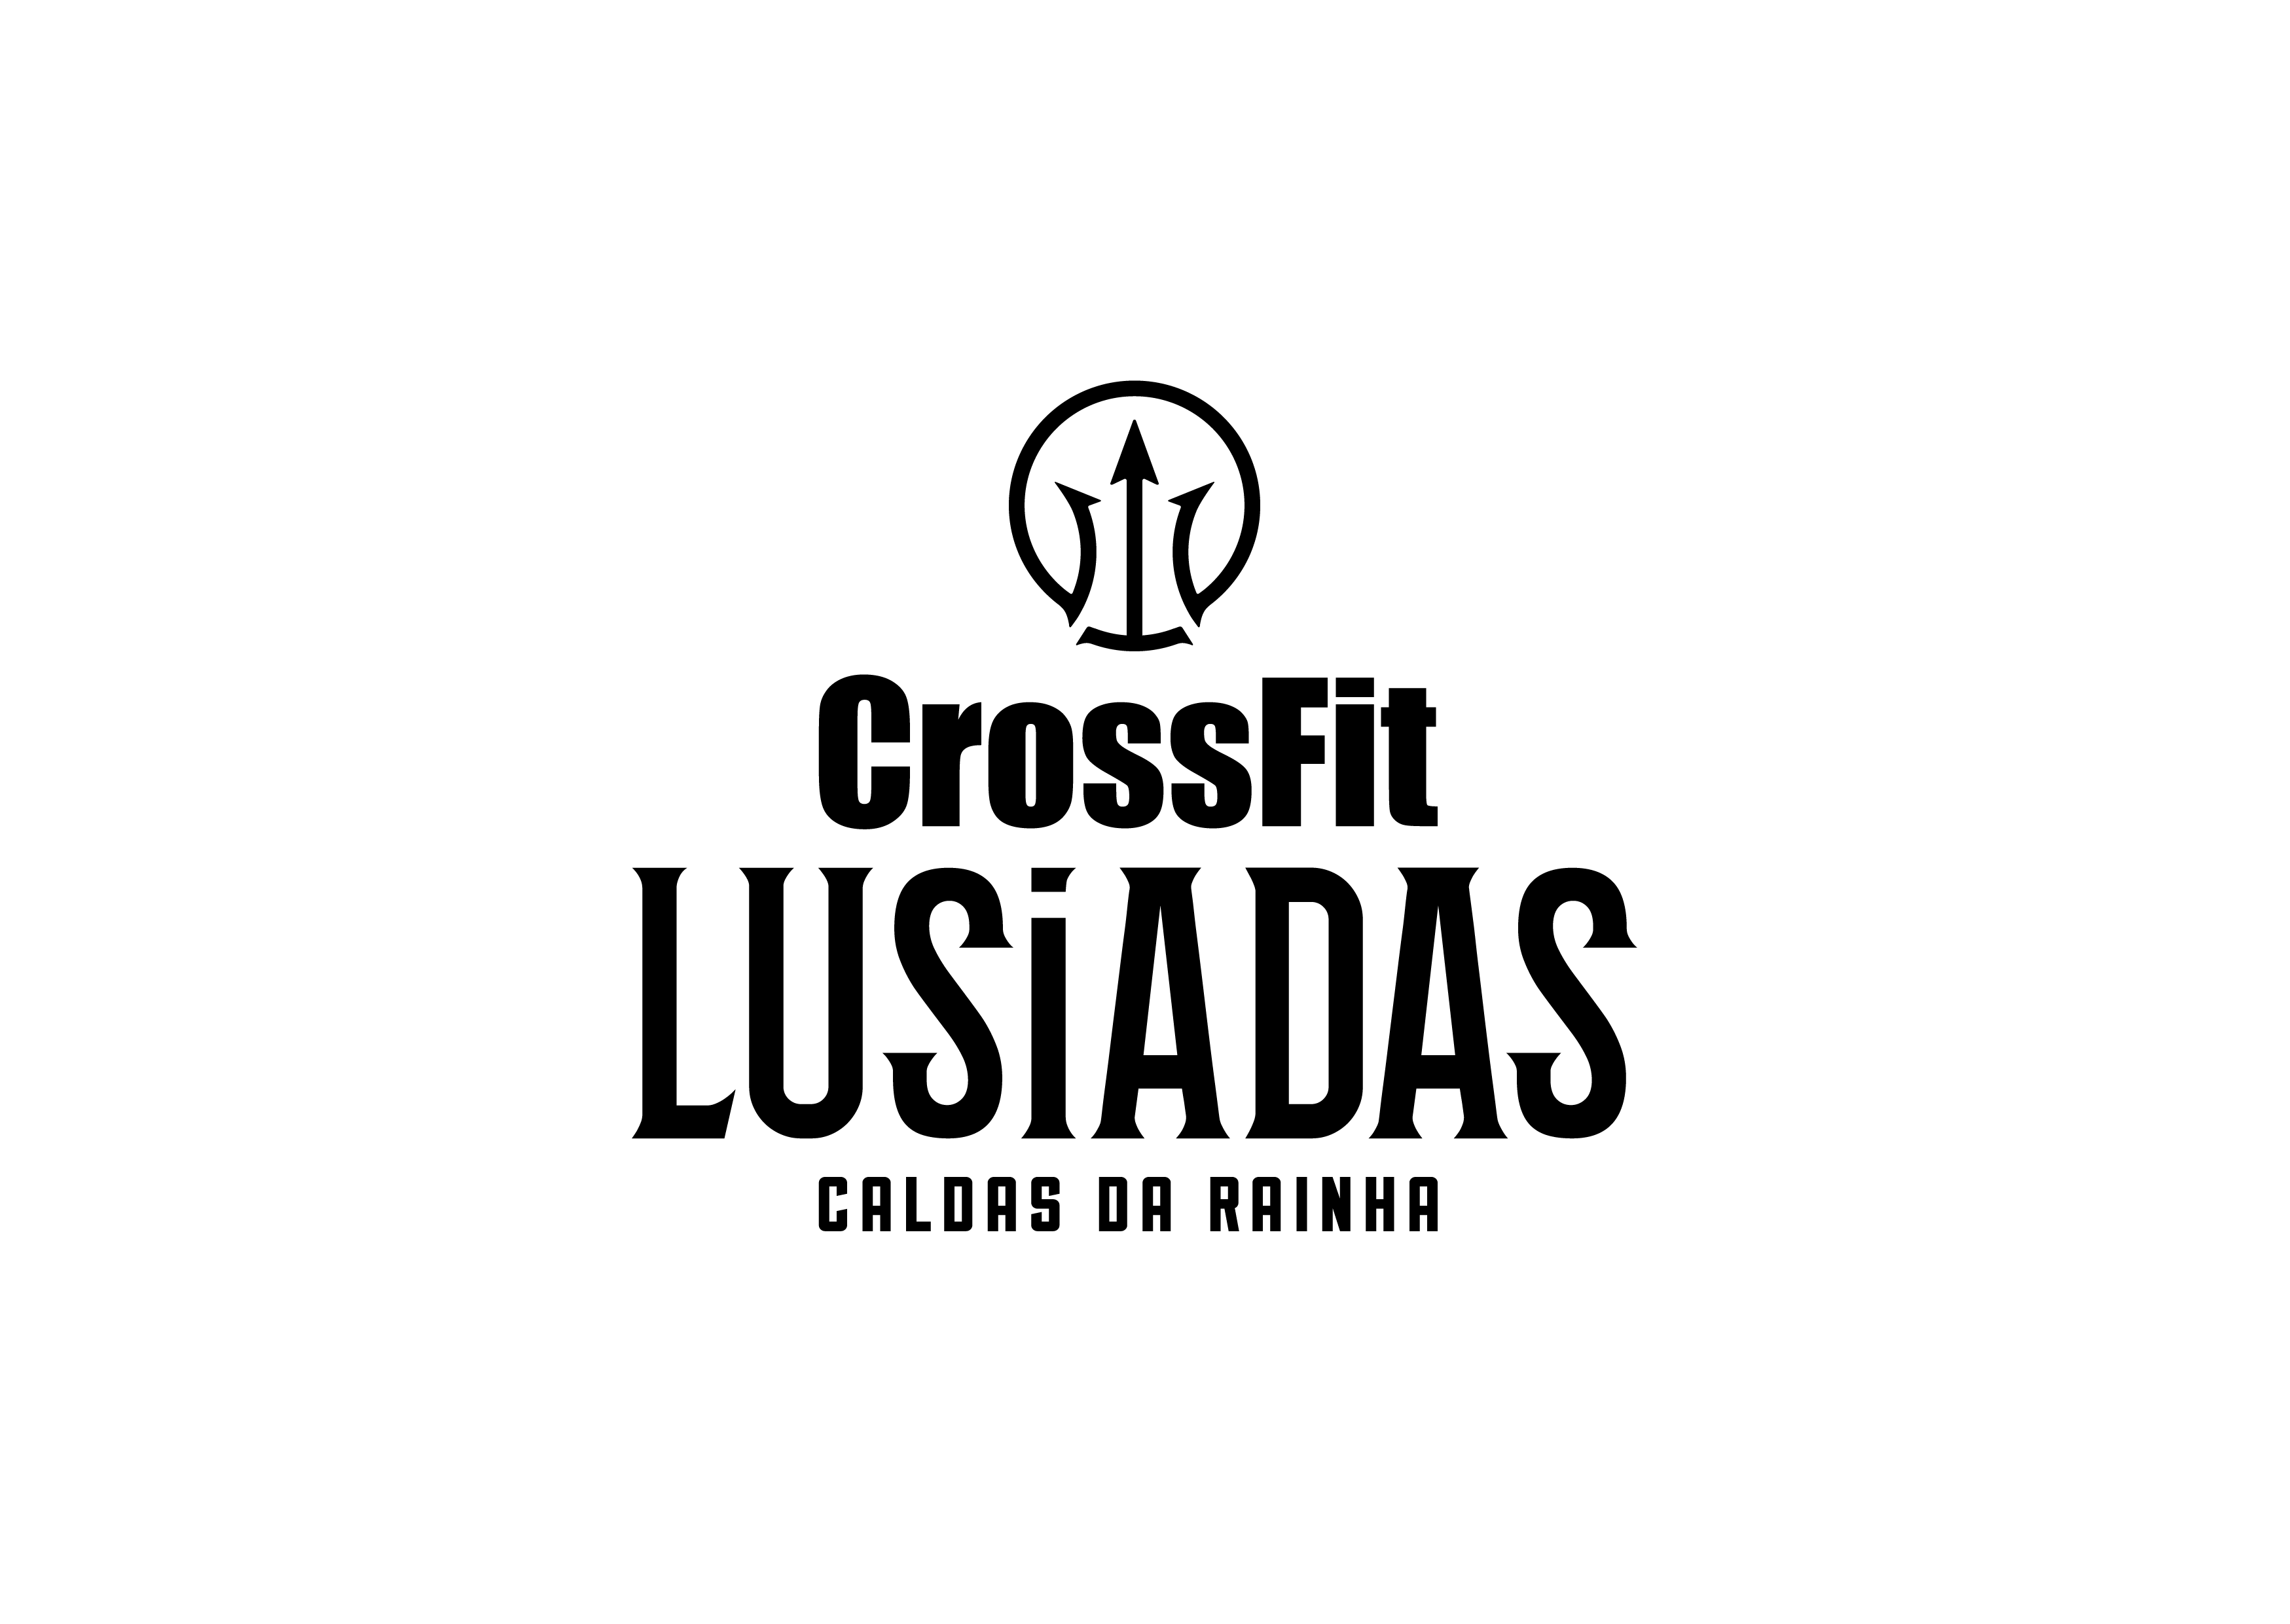 CrossFit Lusíadas